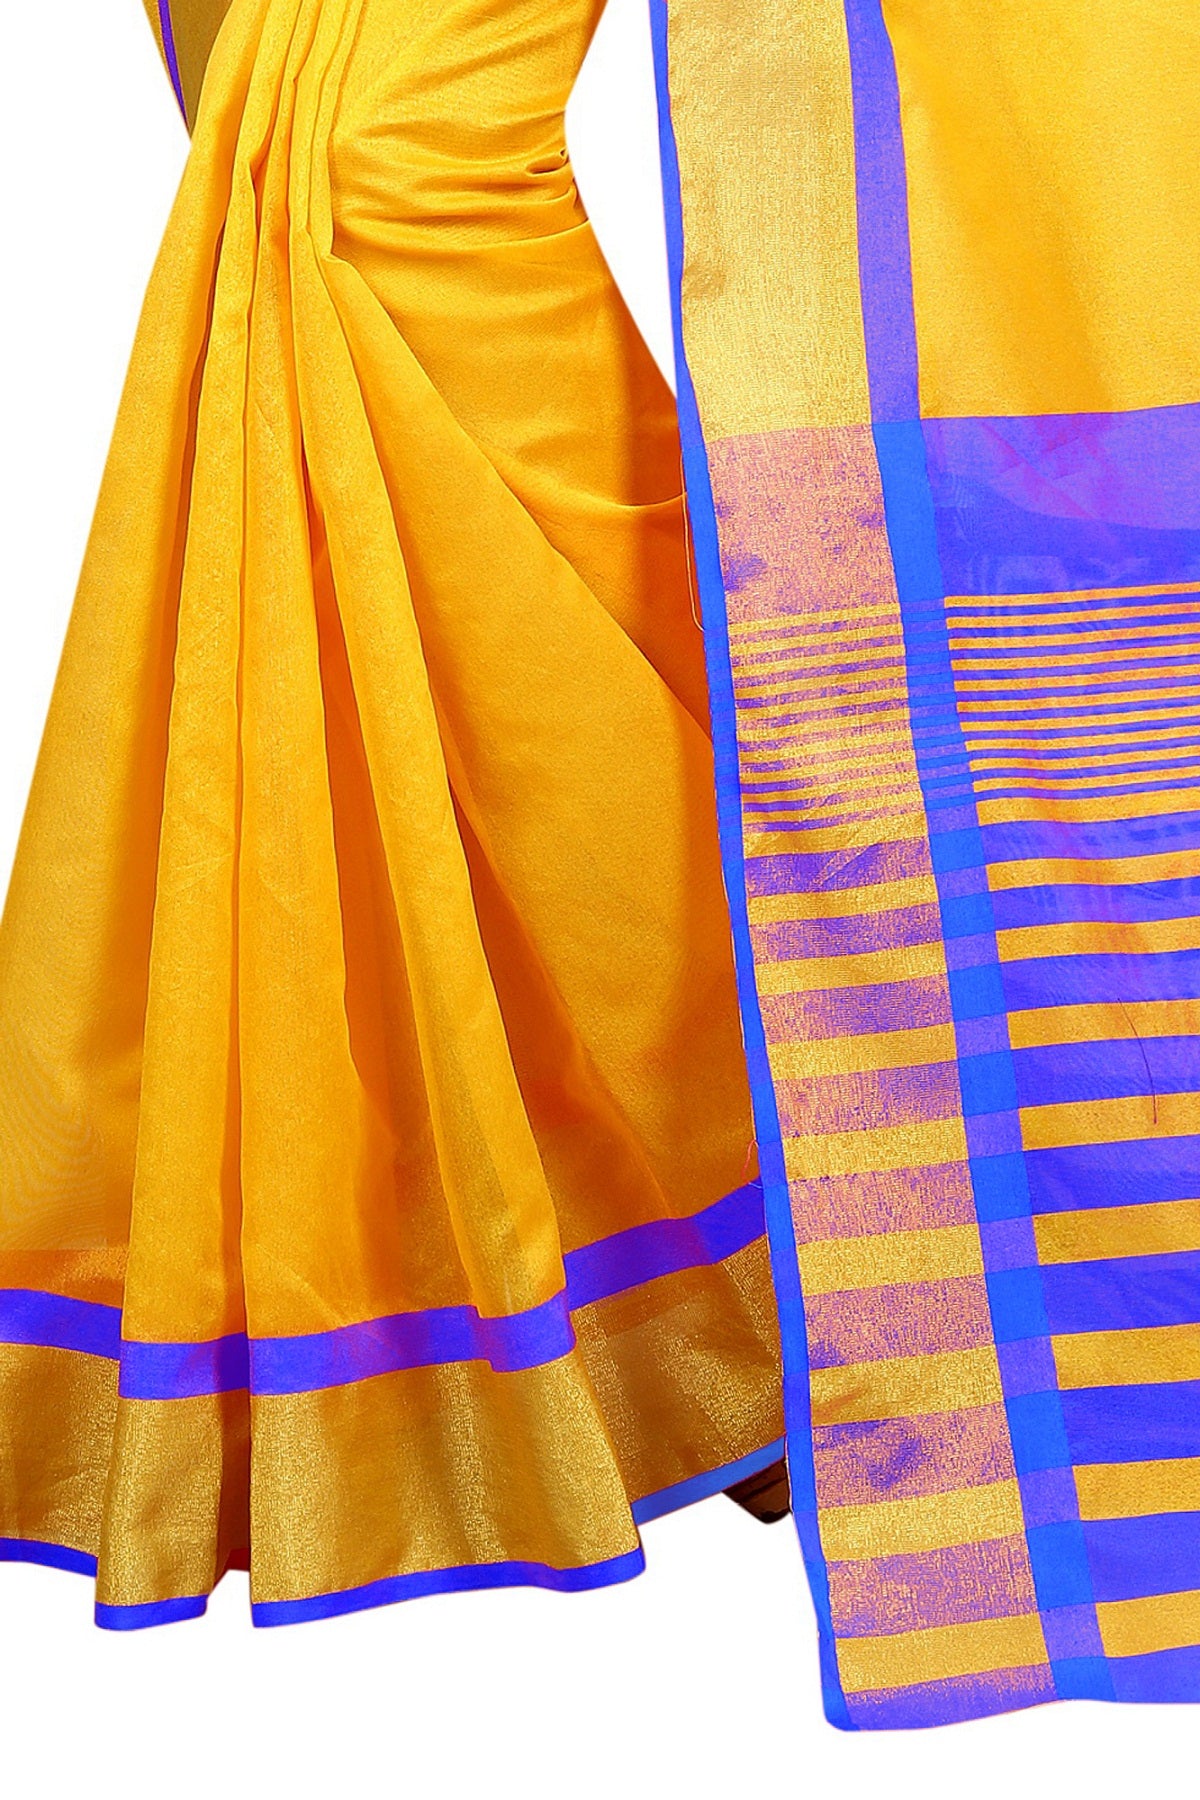 Women's Vamika Yellow Cotton Silk Weaving Saree - Vamika